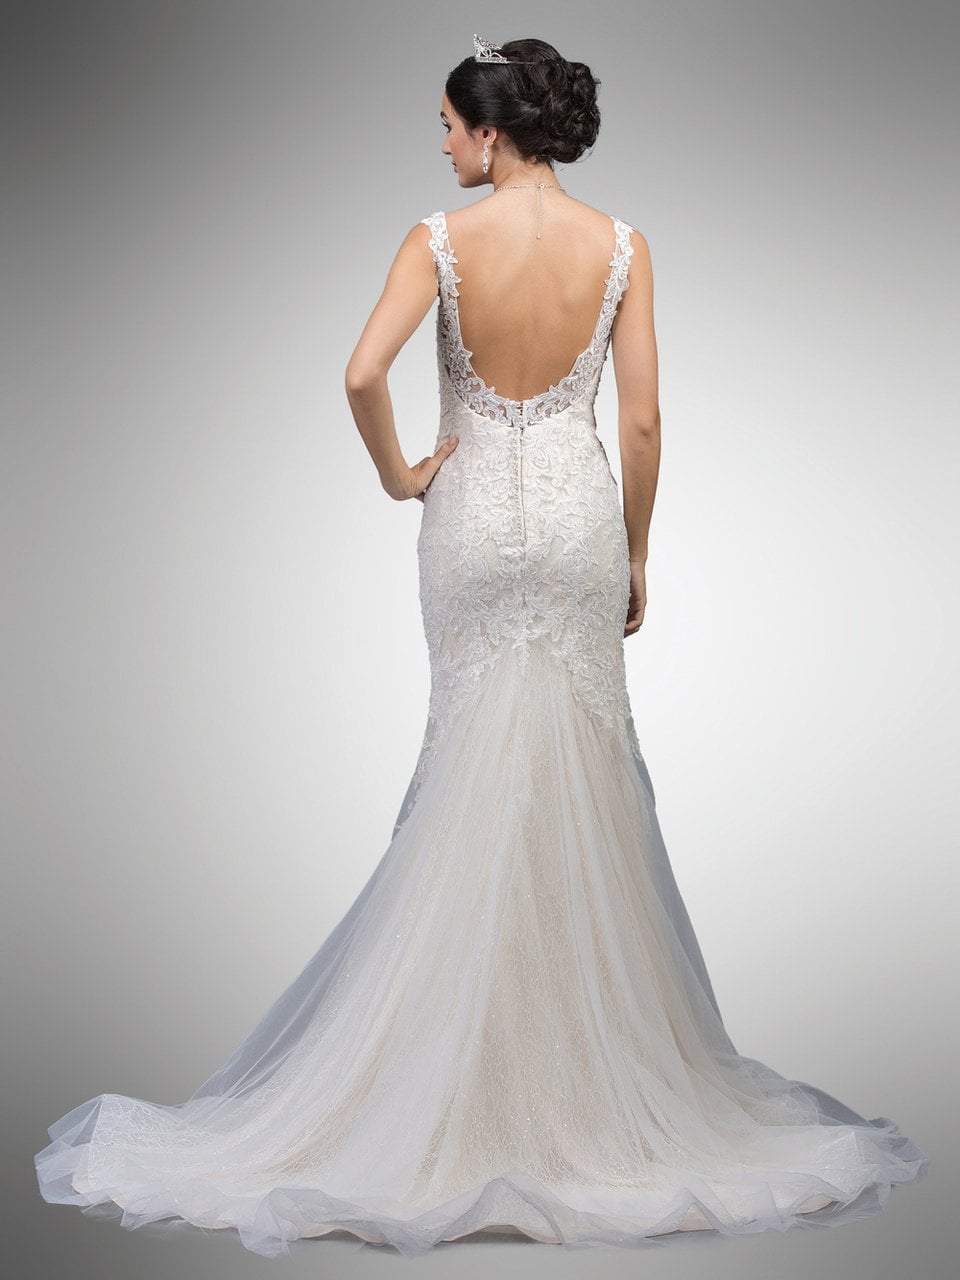 Dancing Queen Bridal - 35 Lace Appliqued Trumpet Bridal Dress Special Occasion Dress